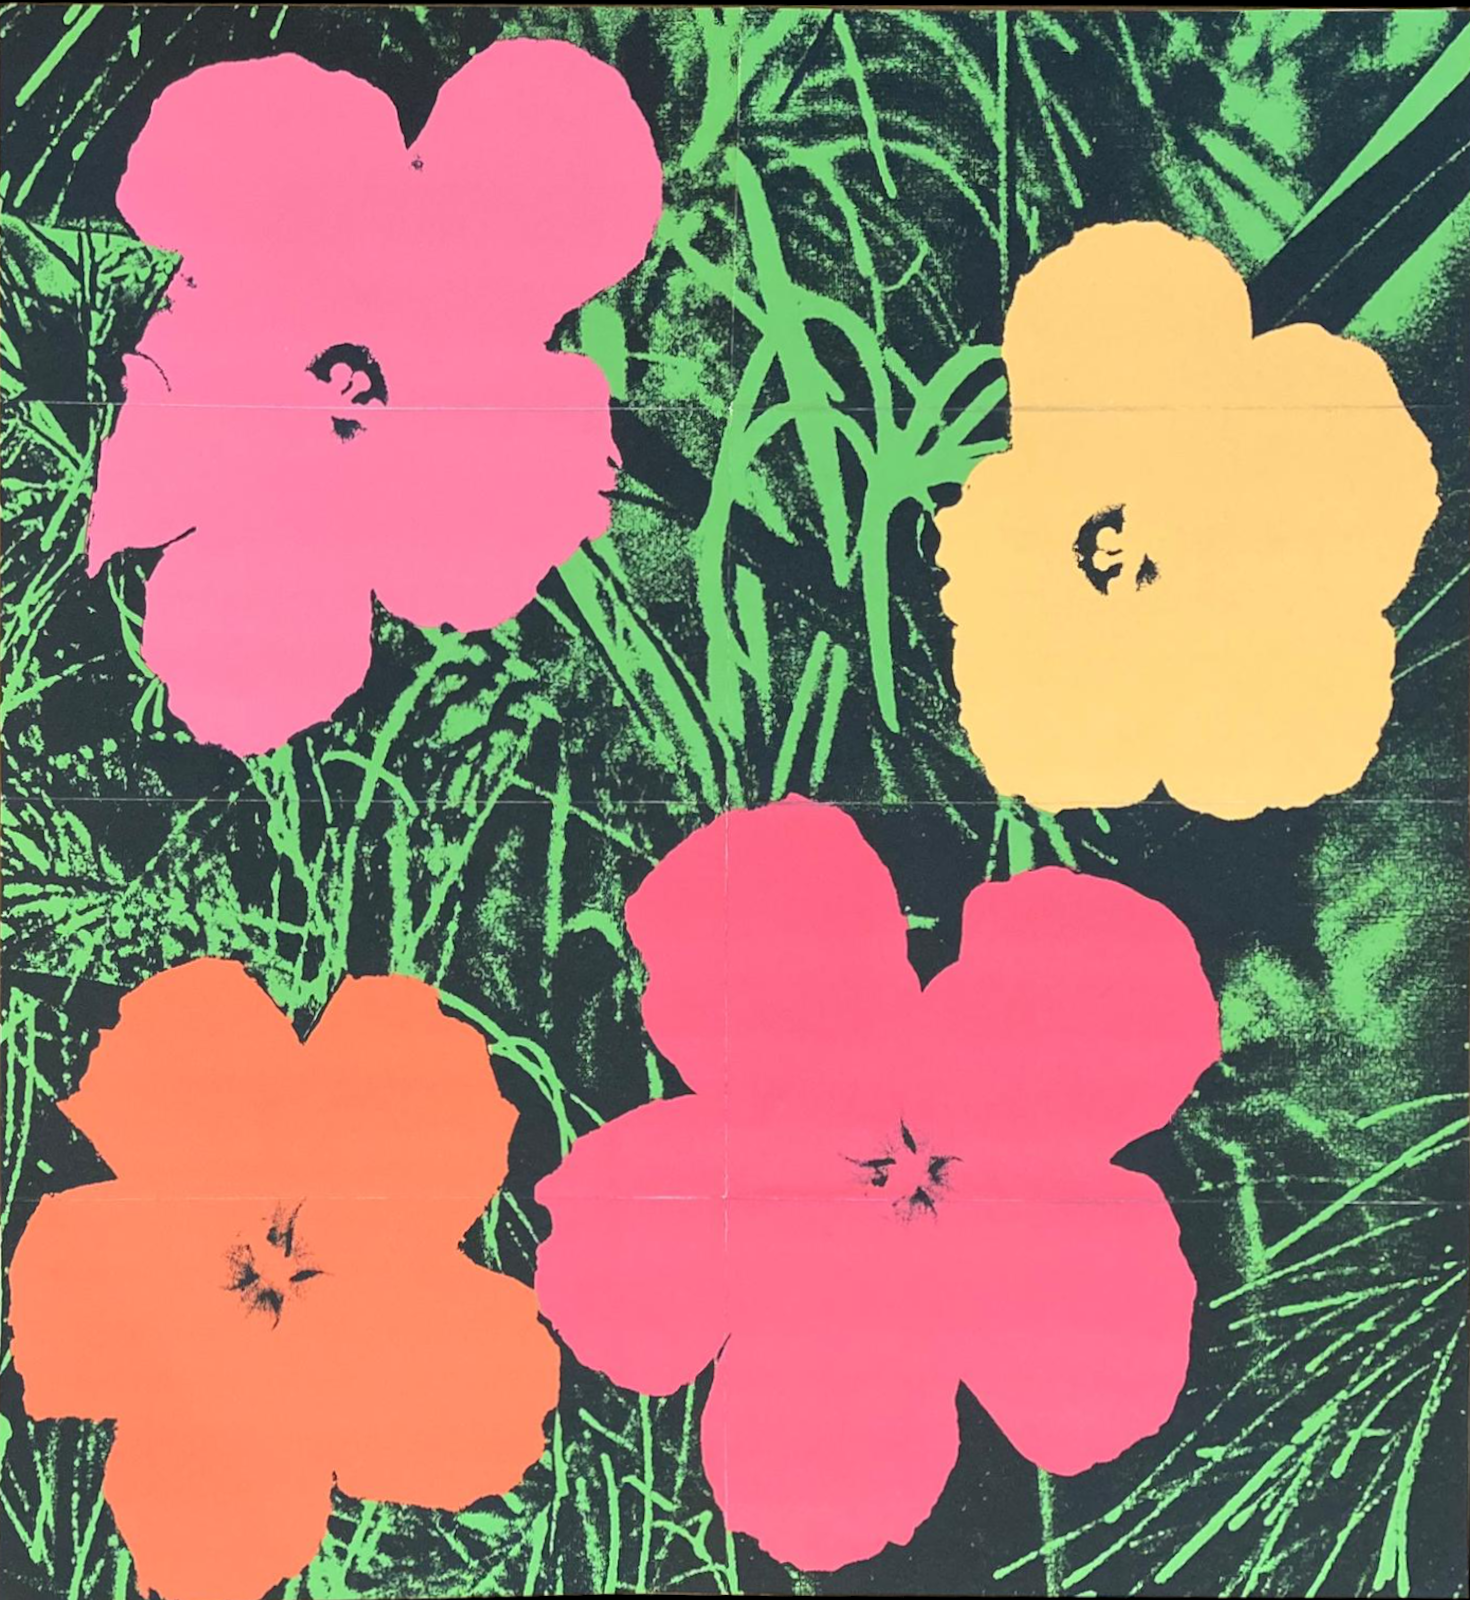 Andy Warhol "Flowers" Original Leo Castelli Mailer 1964